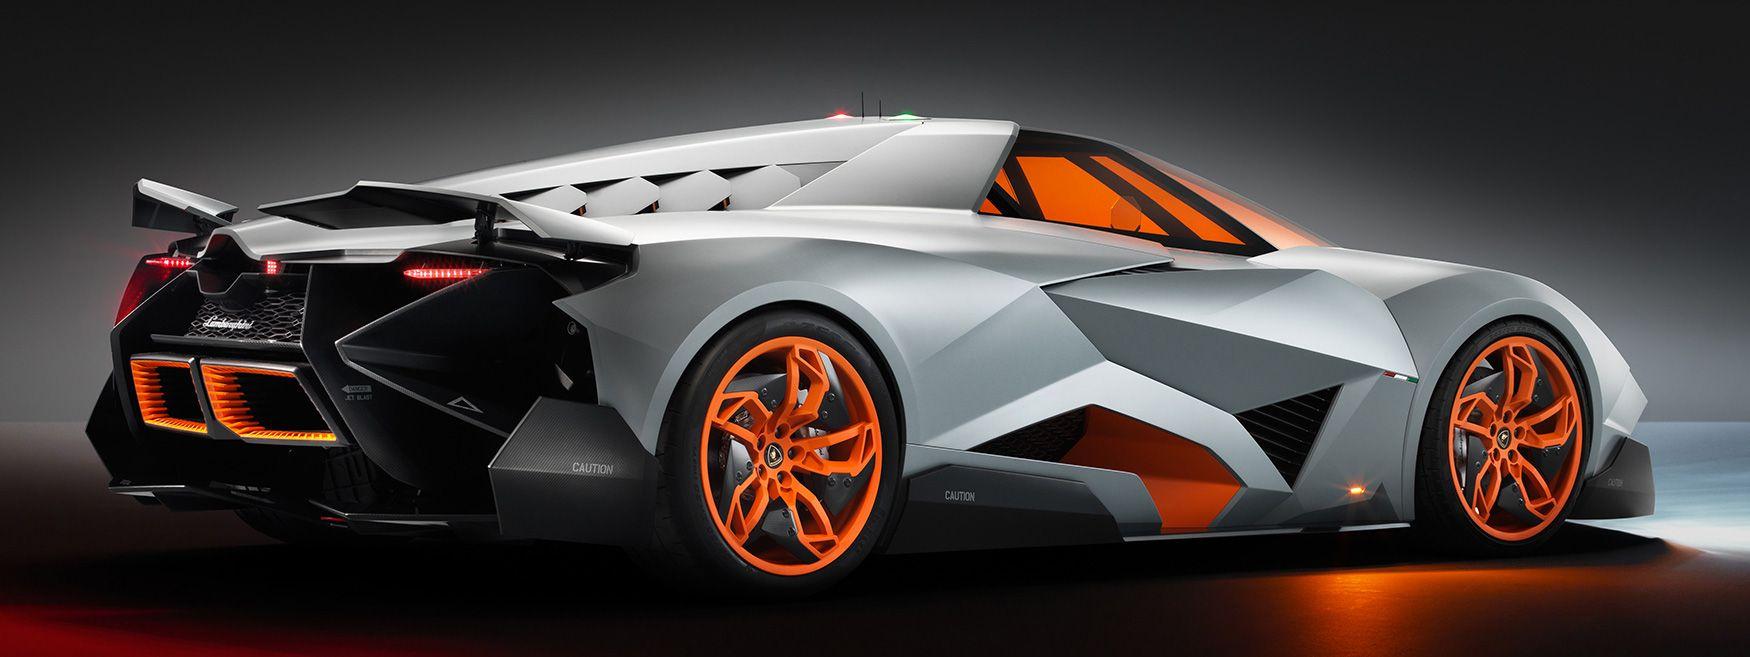 Lamborghini Egoista Concept: because two's a crowd Paul Tan